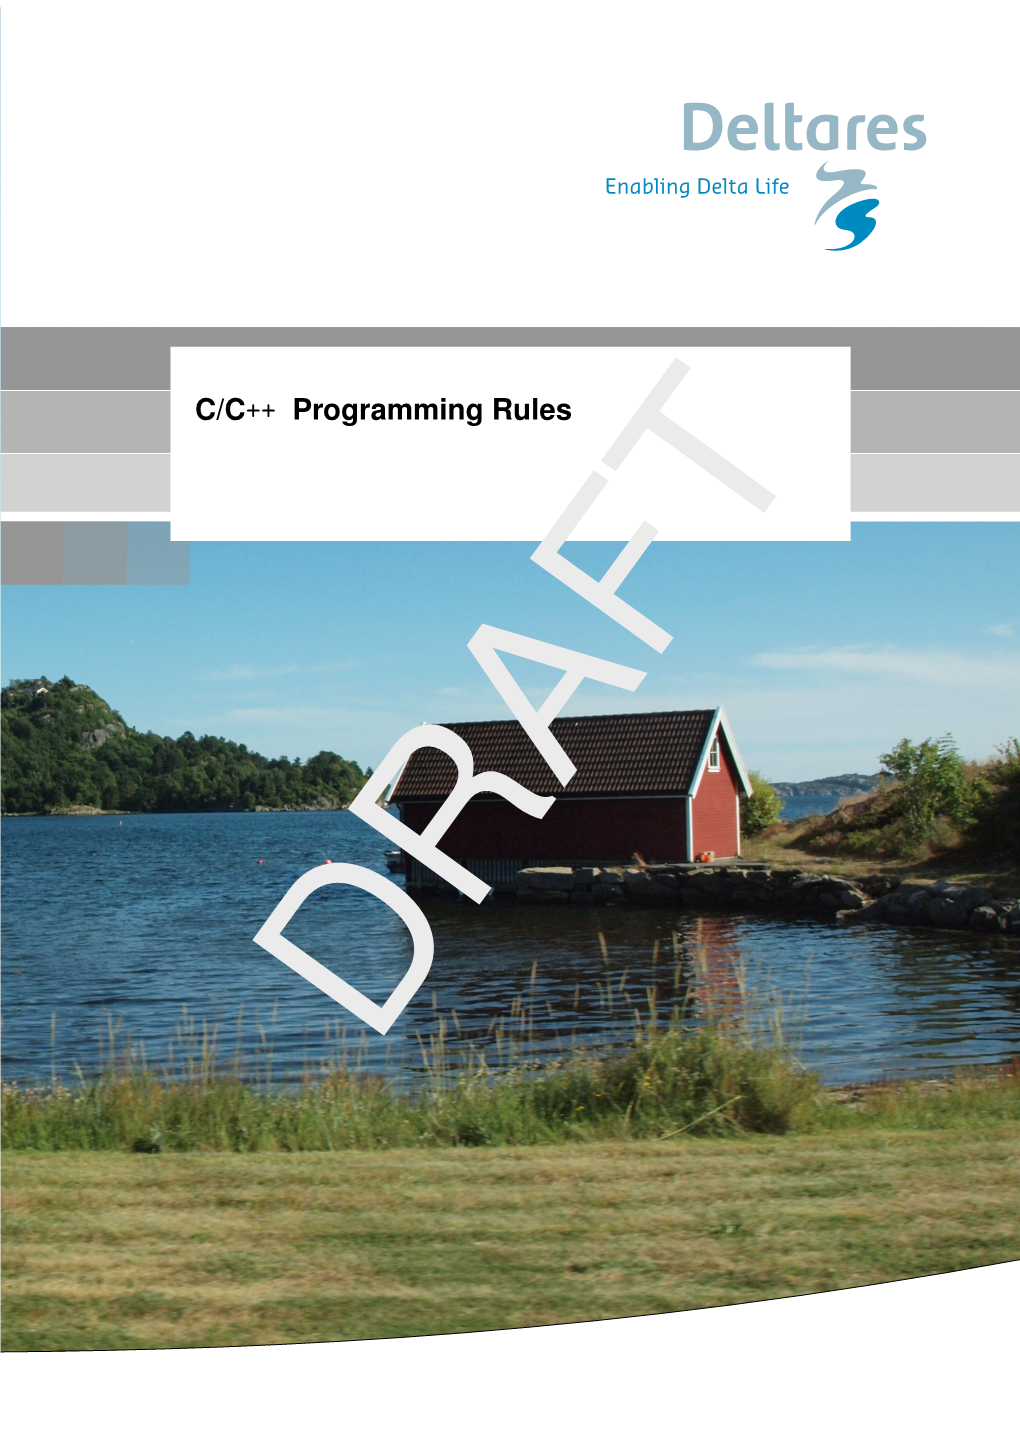 C/C++ Programming Rules